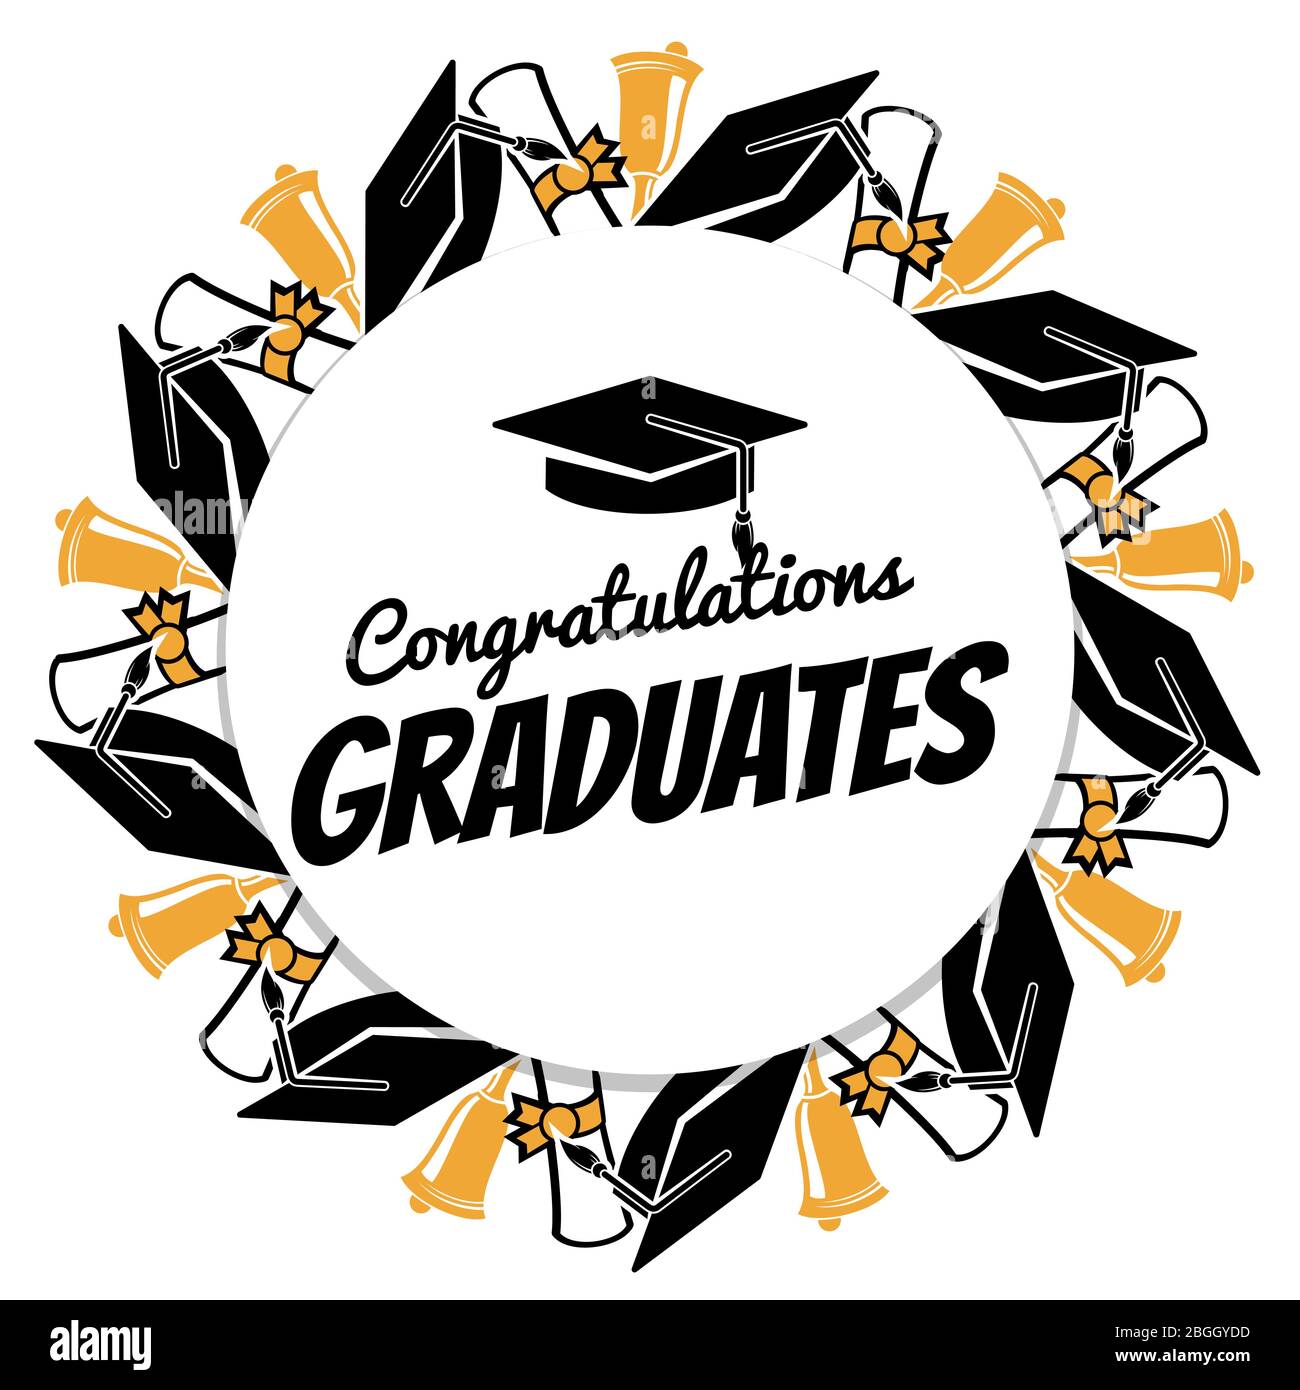 Graduate congrats hi-res stock photography and images - Alamy